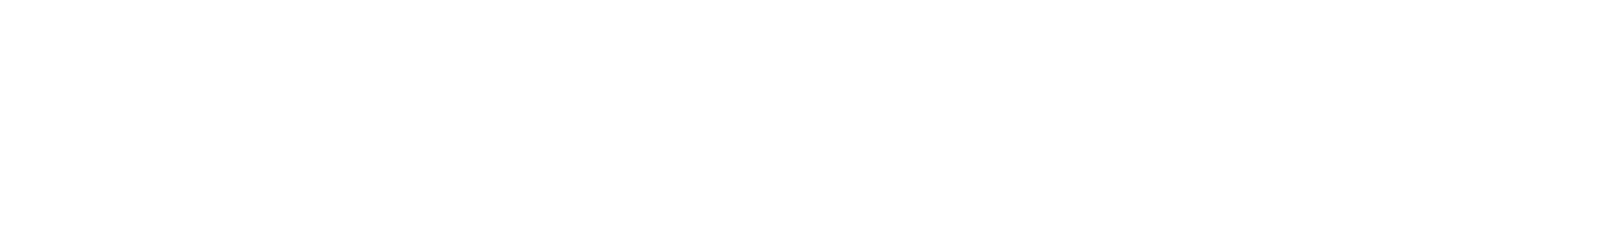 Marqeta logo large for dark backgrounds (transparent PNG)